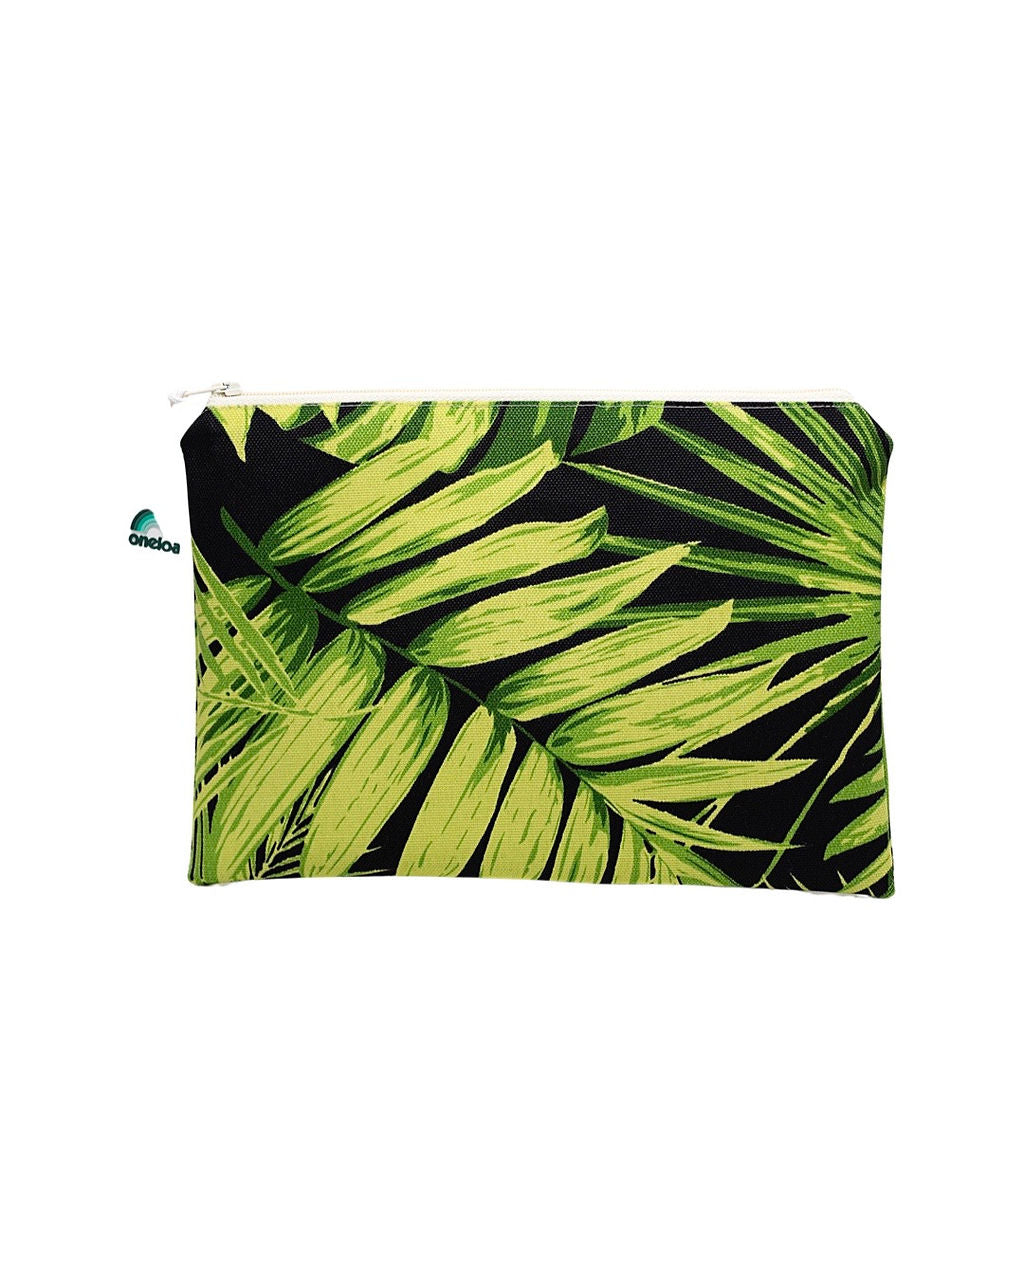 Oneloa Areca Palm Clutch Size Wet/Dry Bag